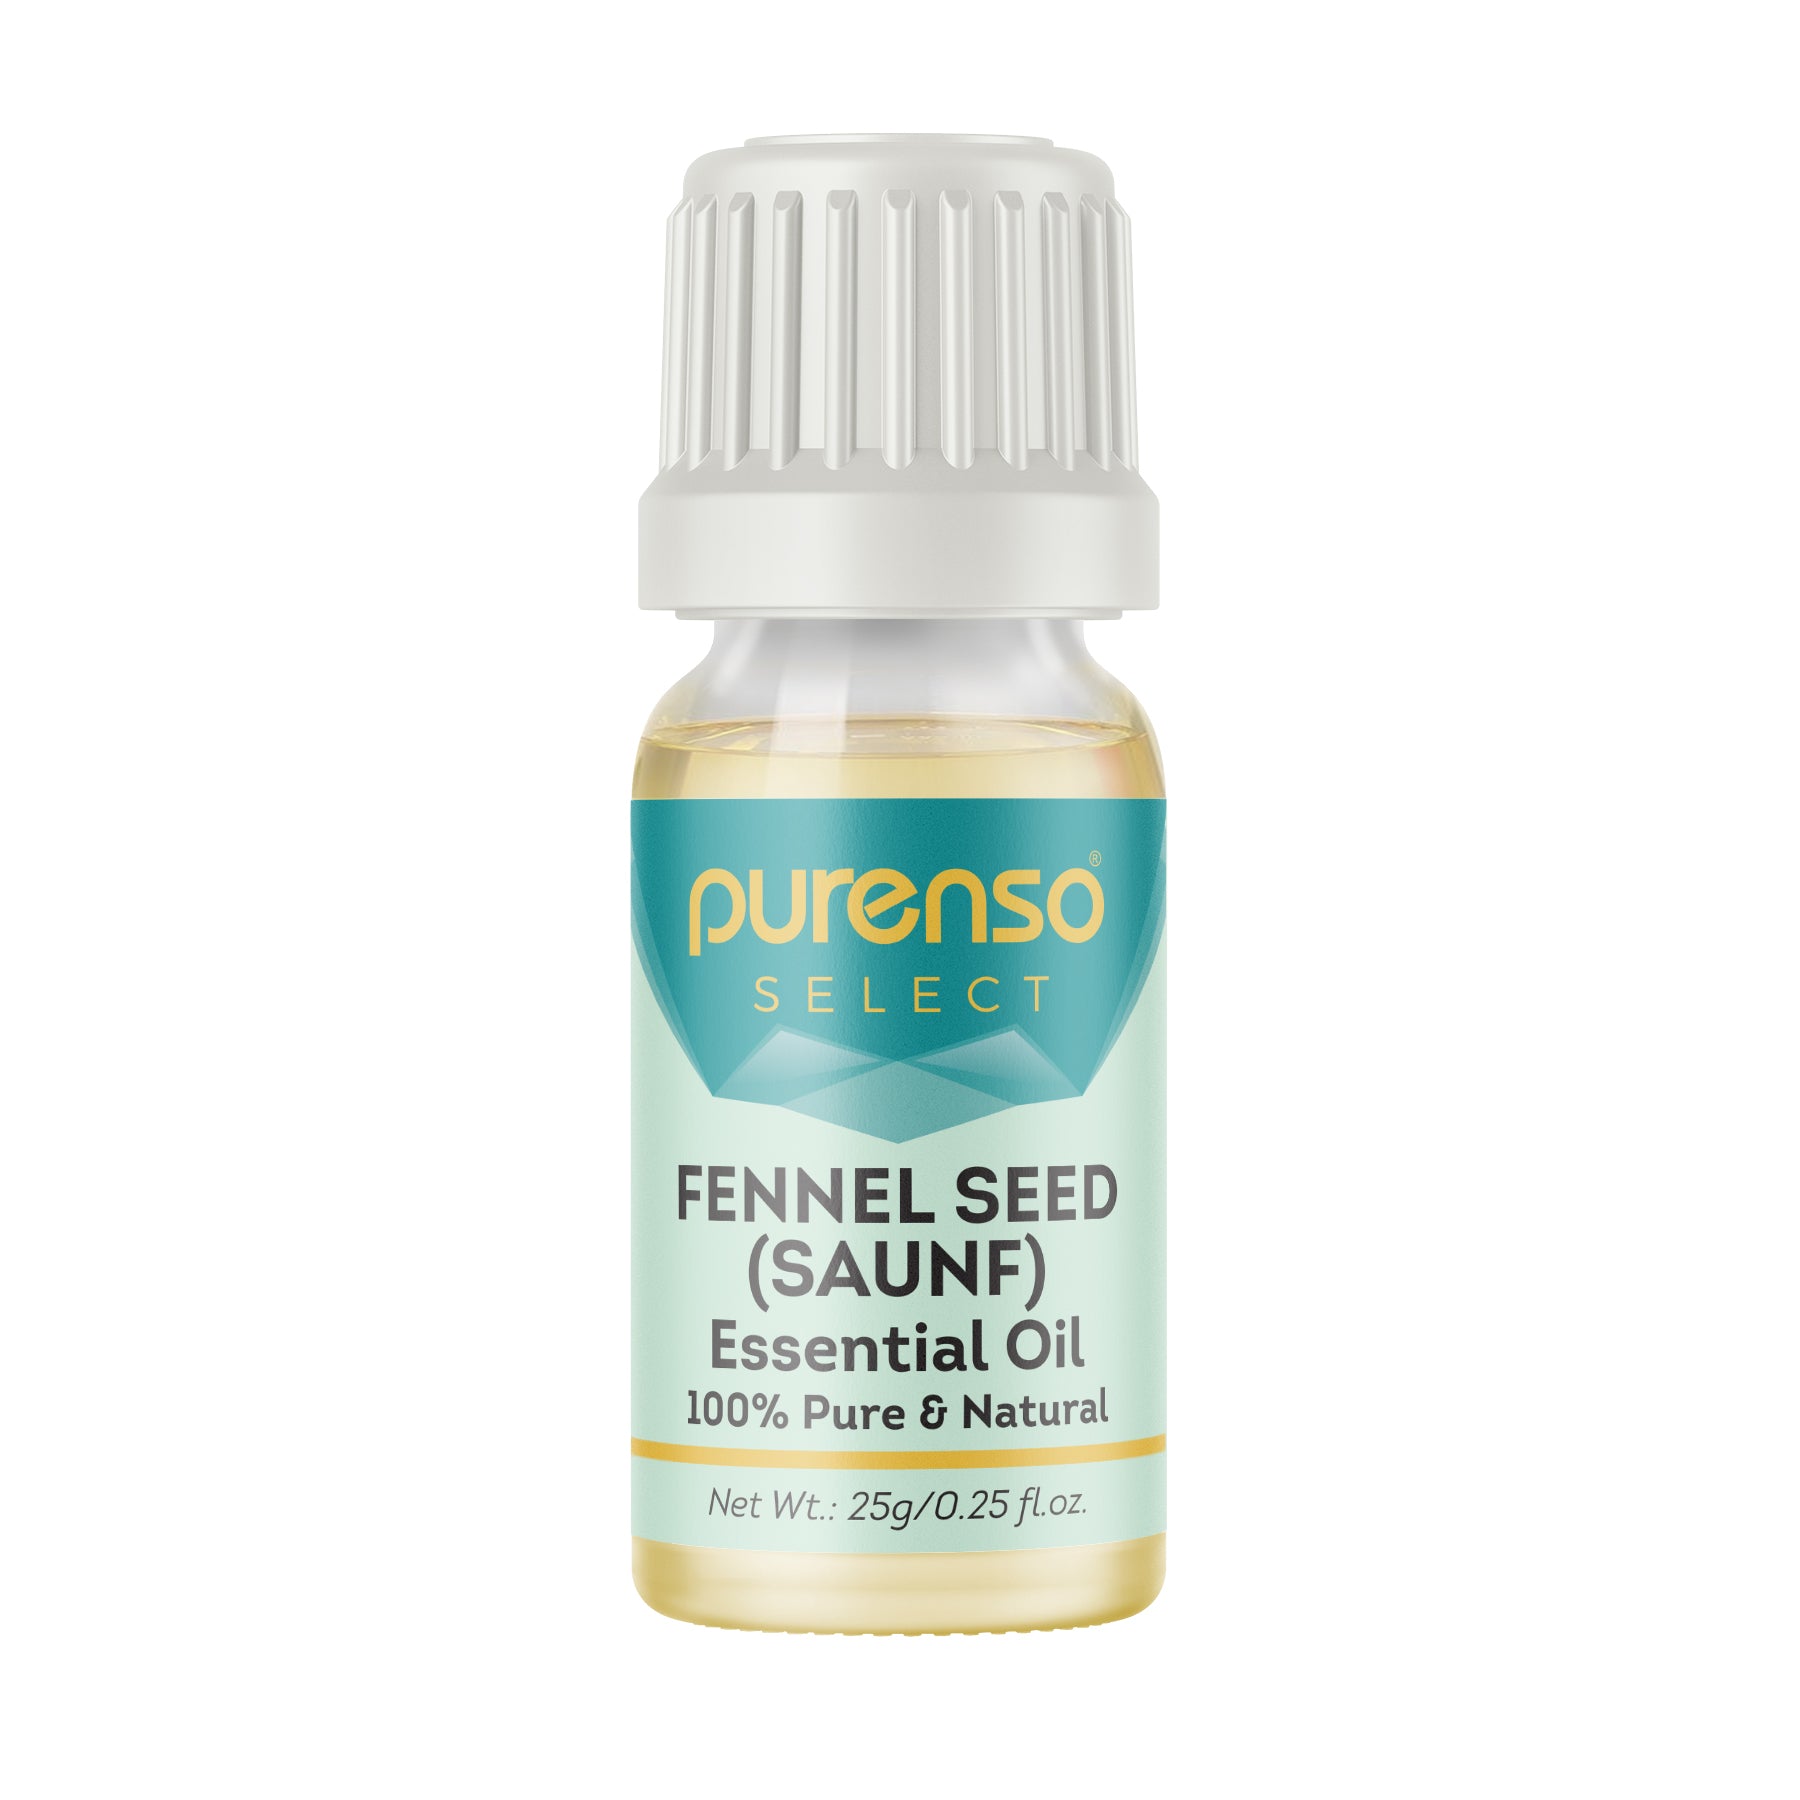 Fennel Seed (Saunf) Essential Oil